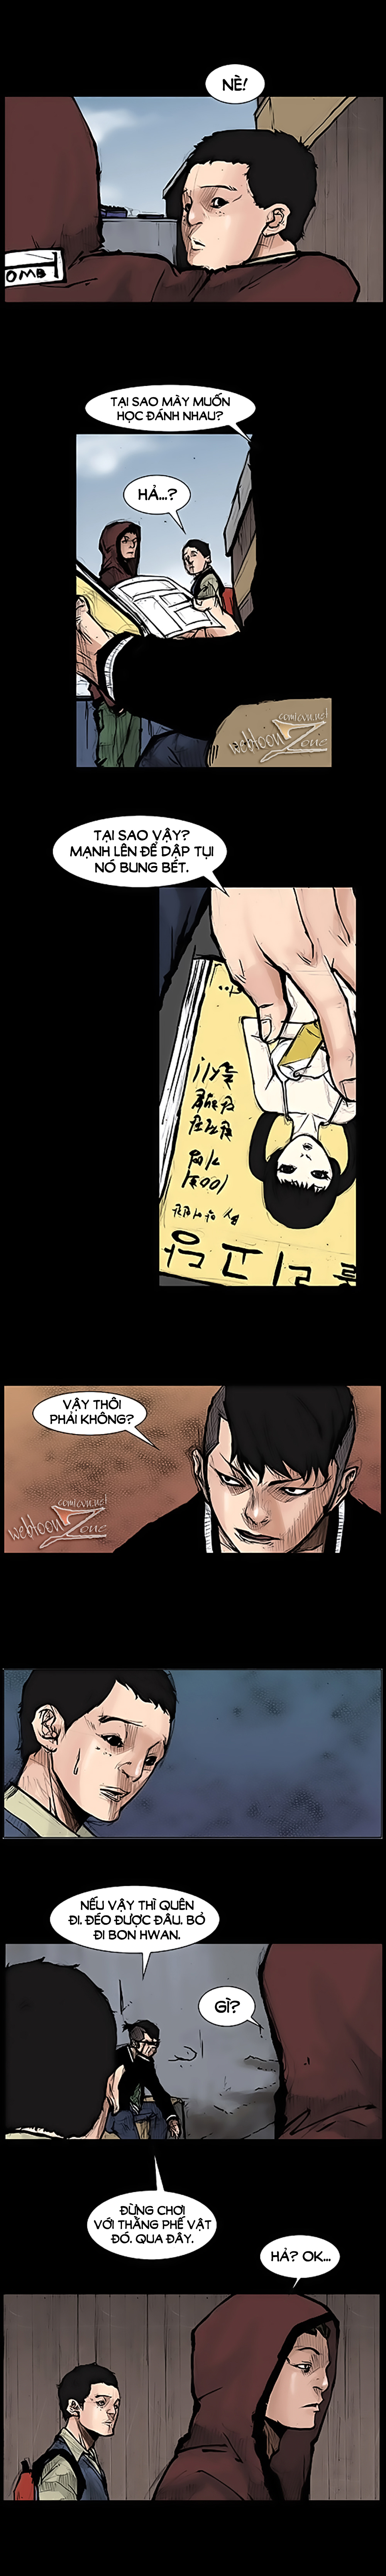 Dokgo Rewind kỳ 4 trang 11